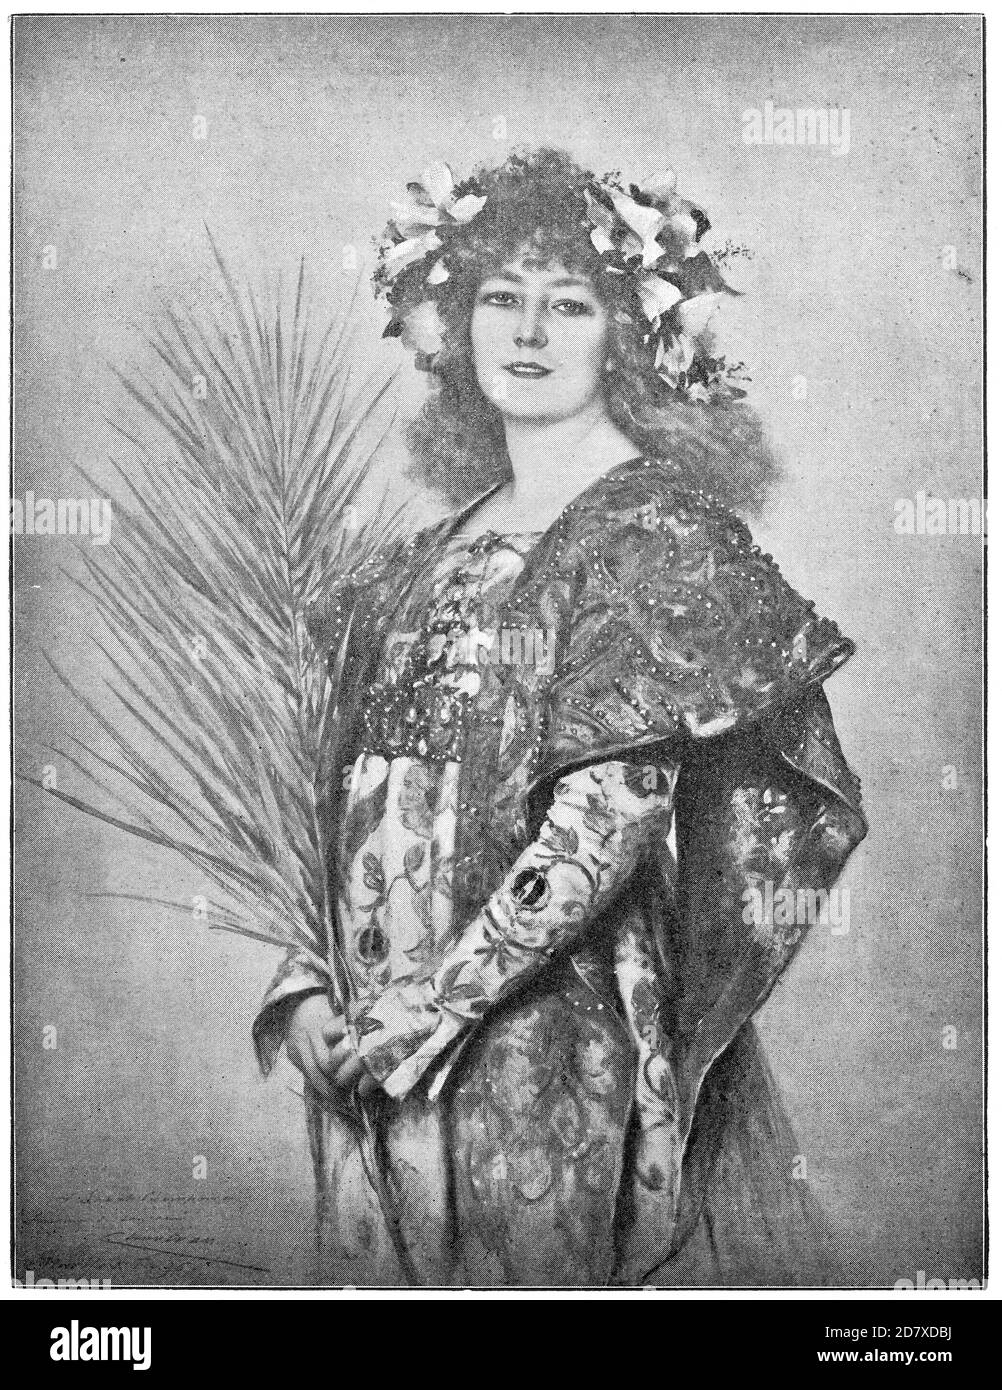 Portrait of Sarah Bernhardt (as Gismonda) - a French stage actress. Illustration of the 19th century. White background. Stock Photo